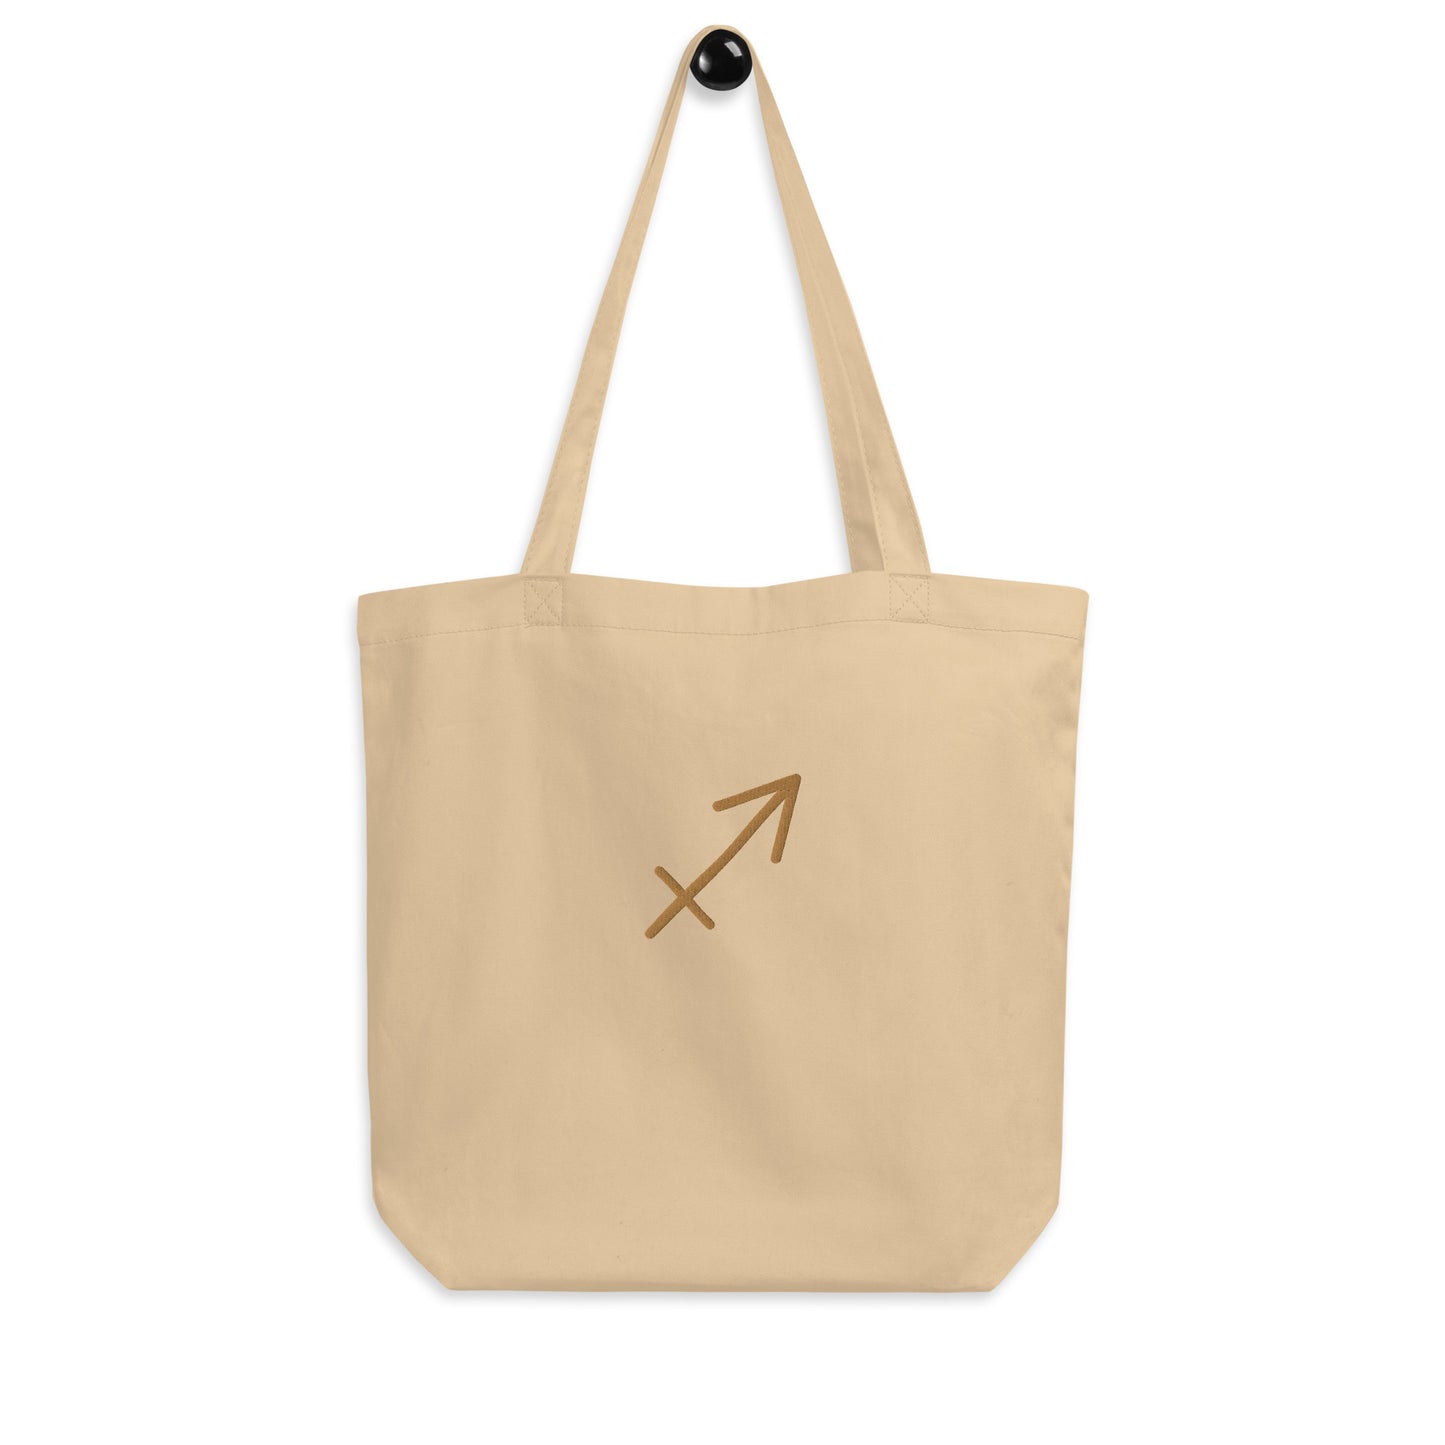 Sagittarius - Small Open Tote Bag - Gold Thread